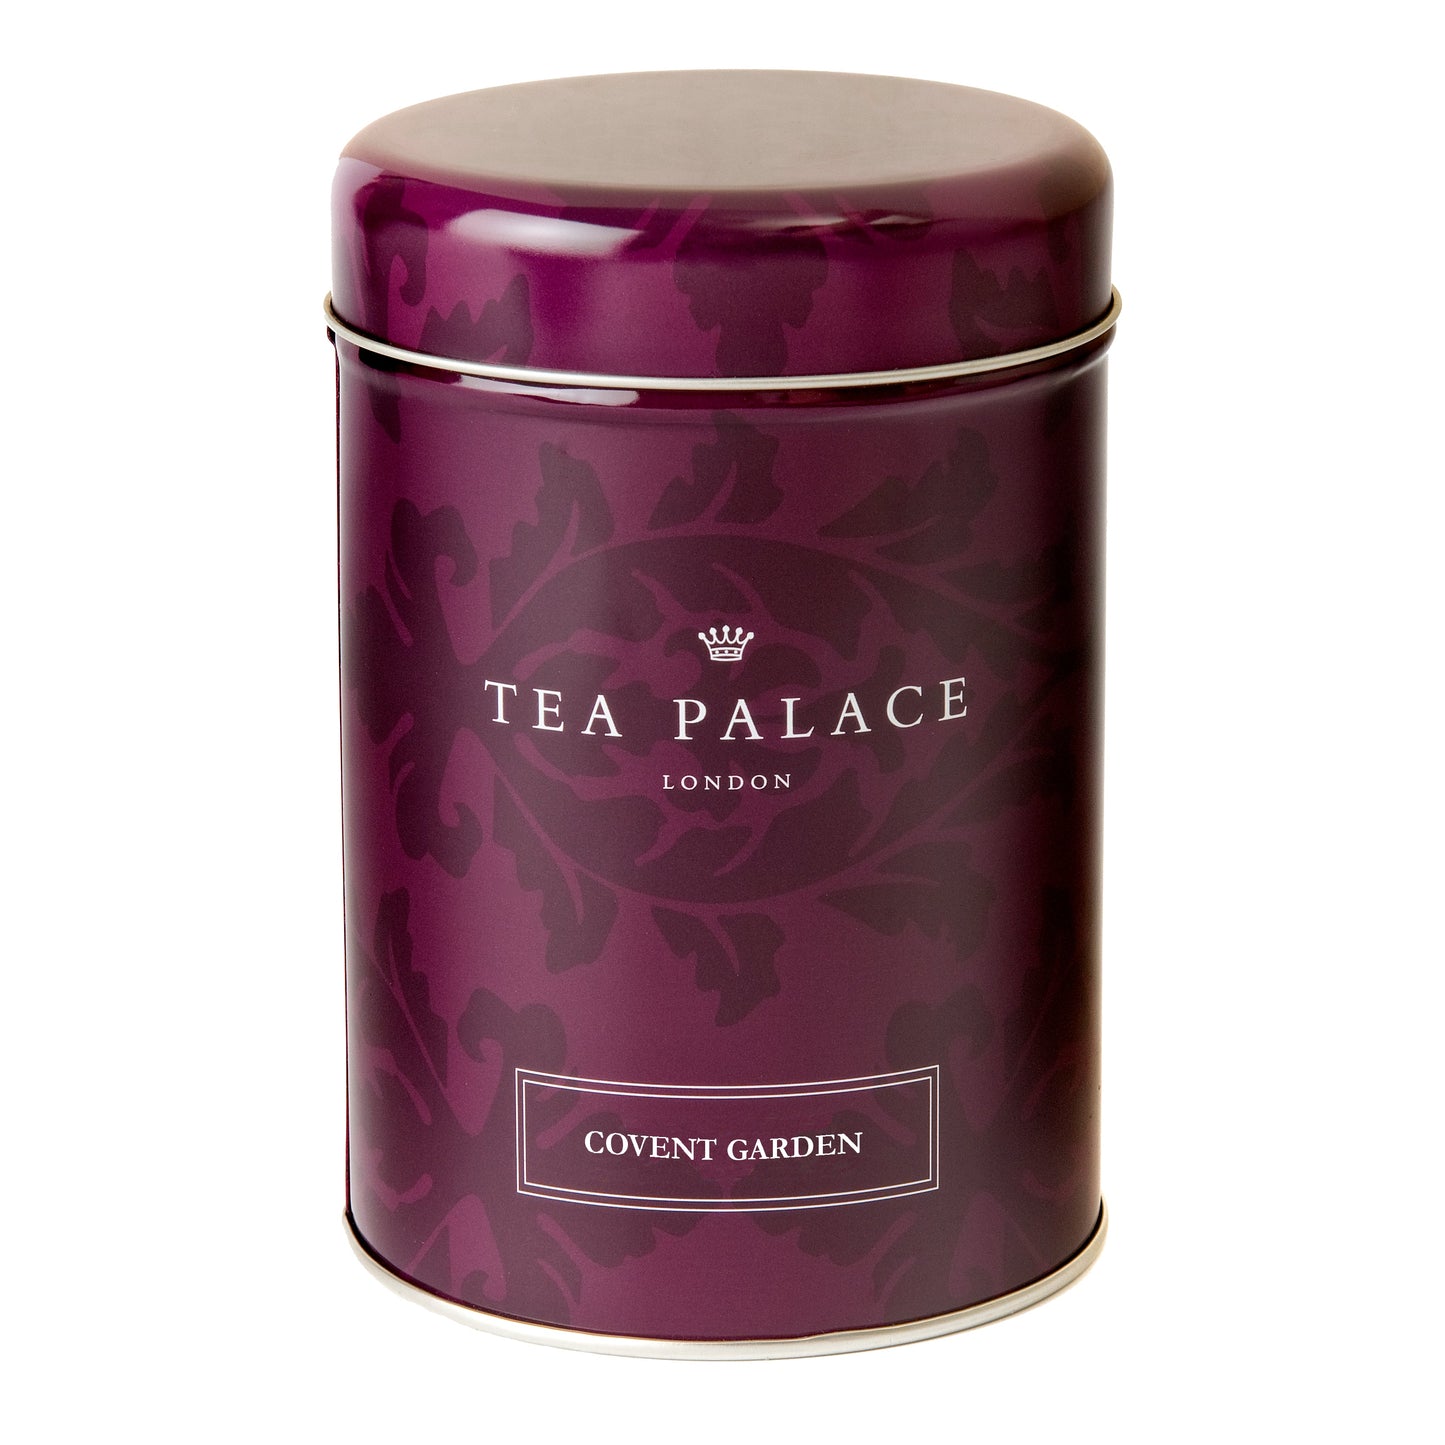 Tea Palace Loose leaf tea caddy